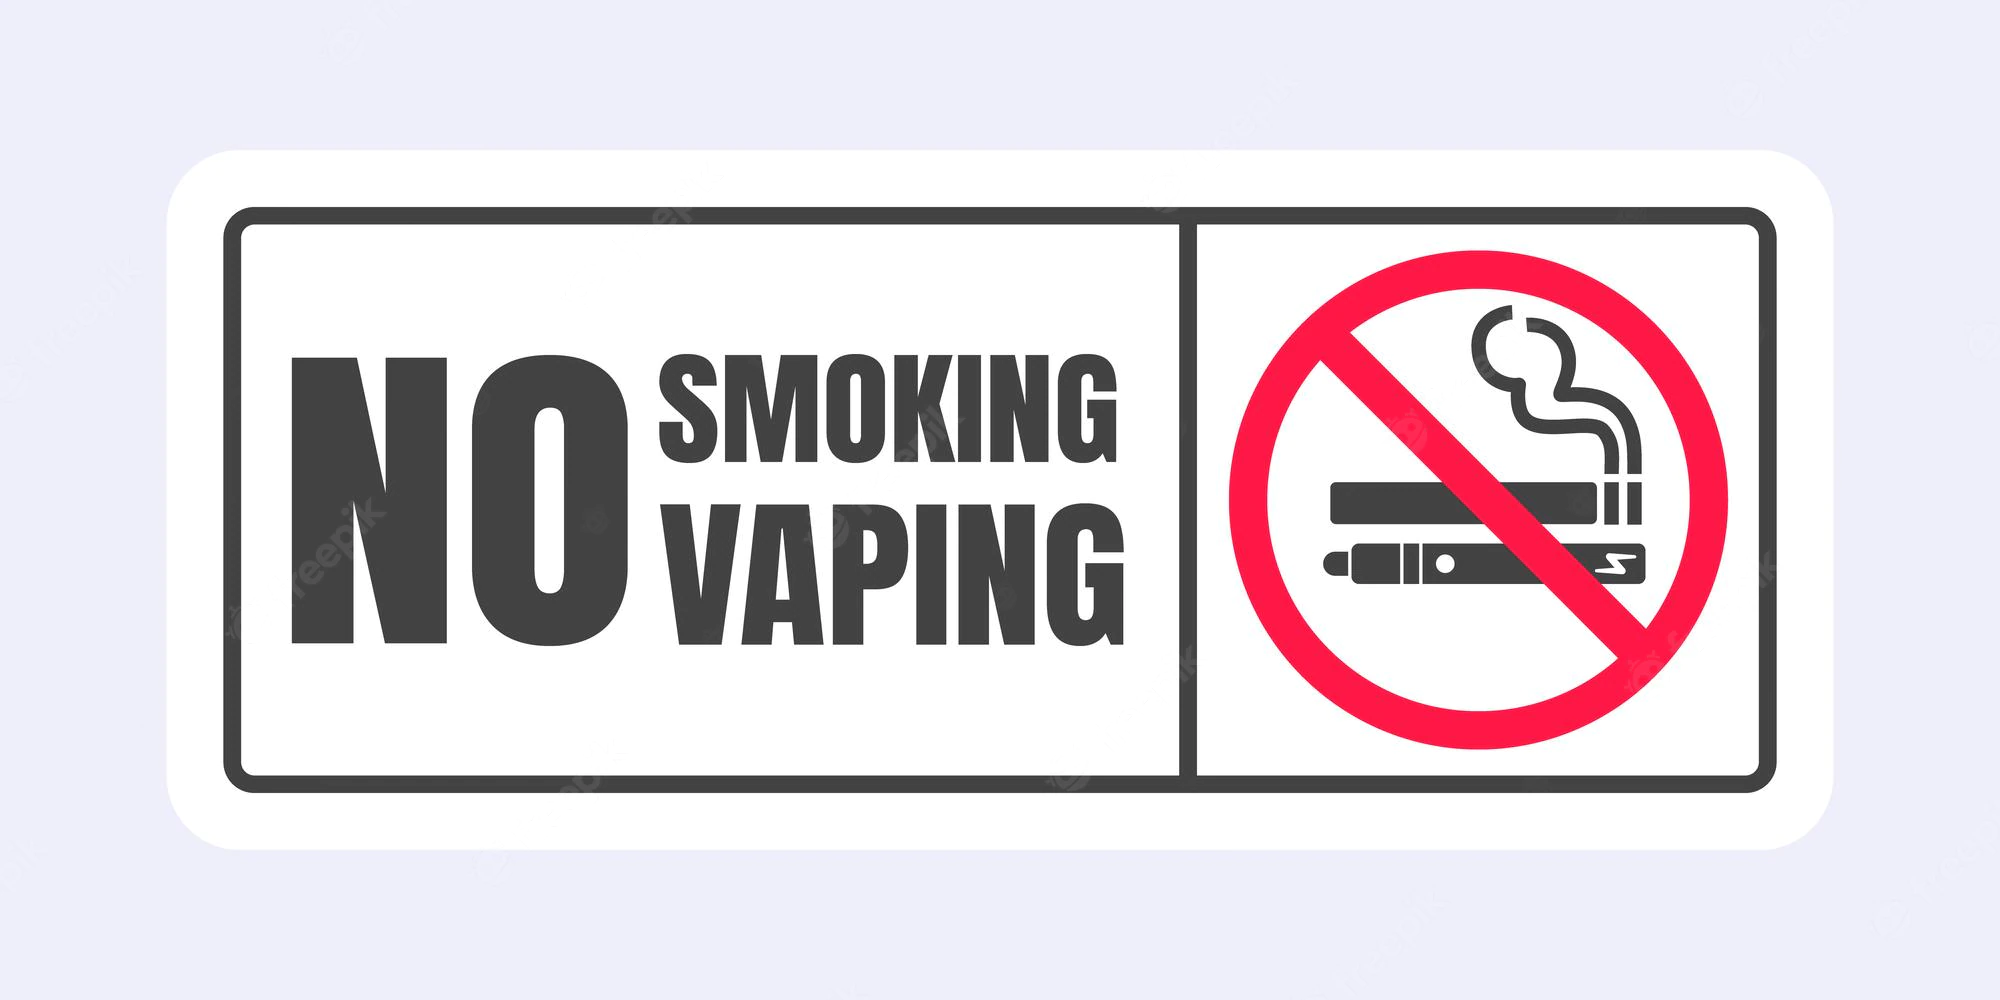 A no smoking and vaping sign